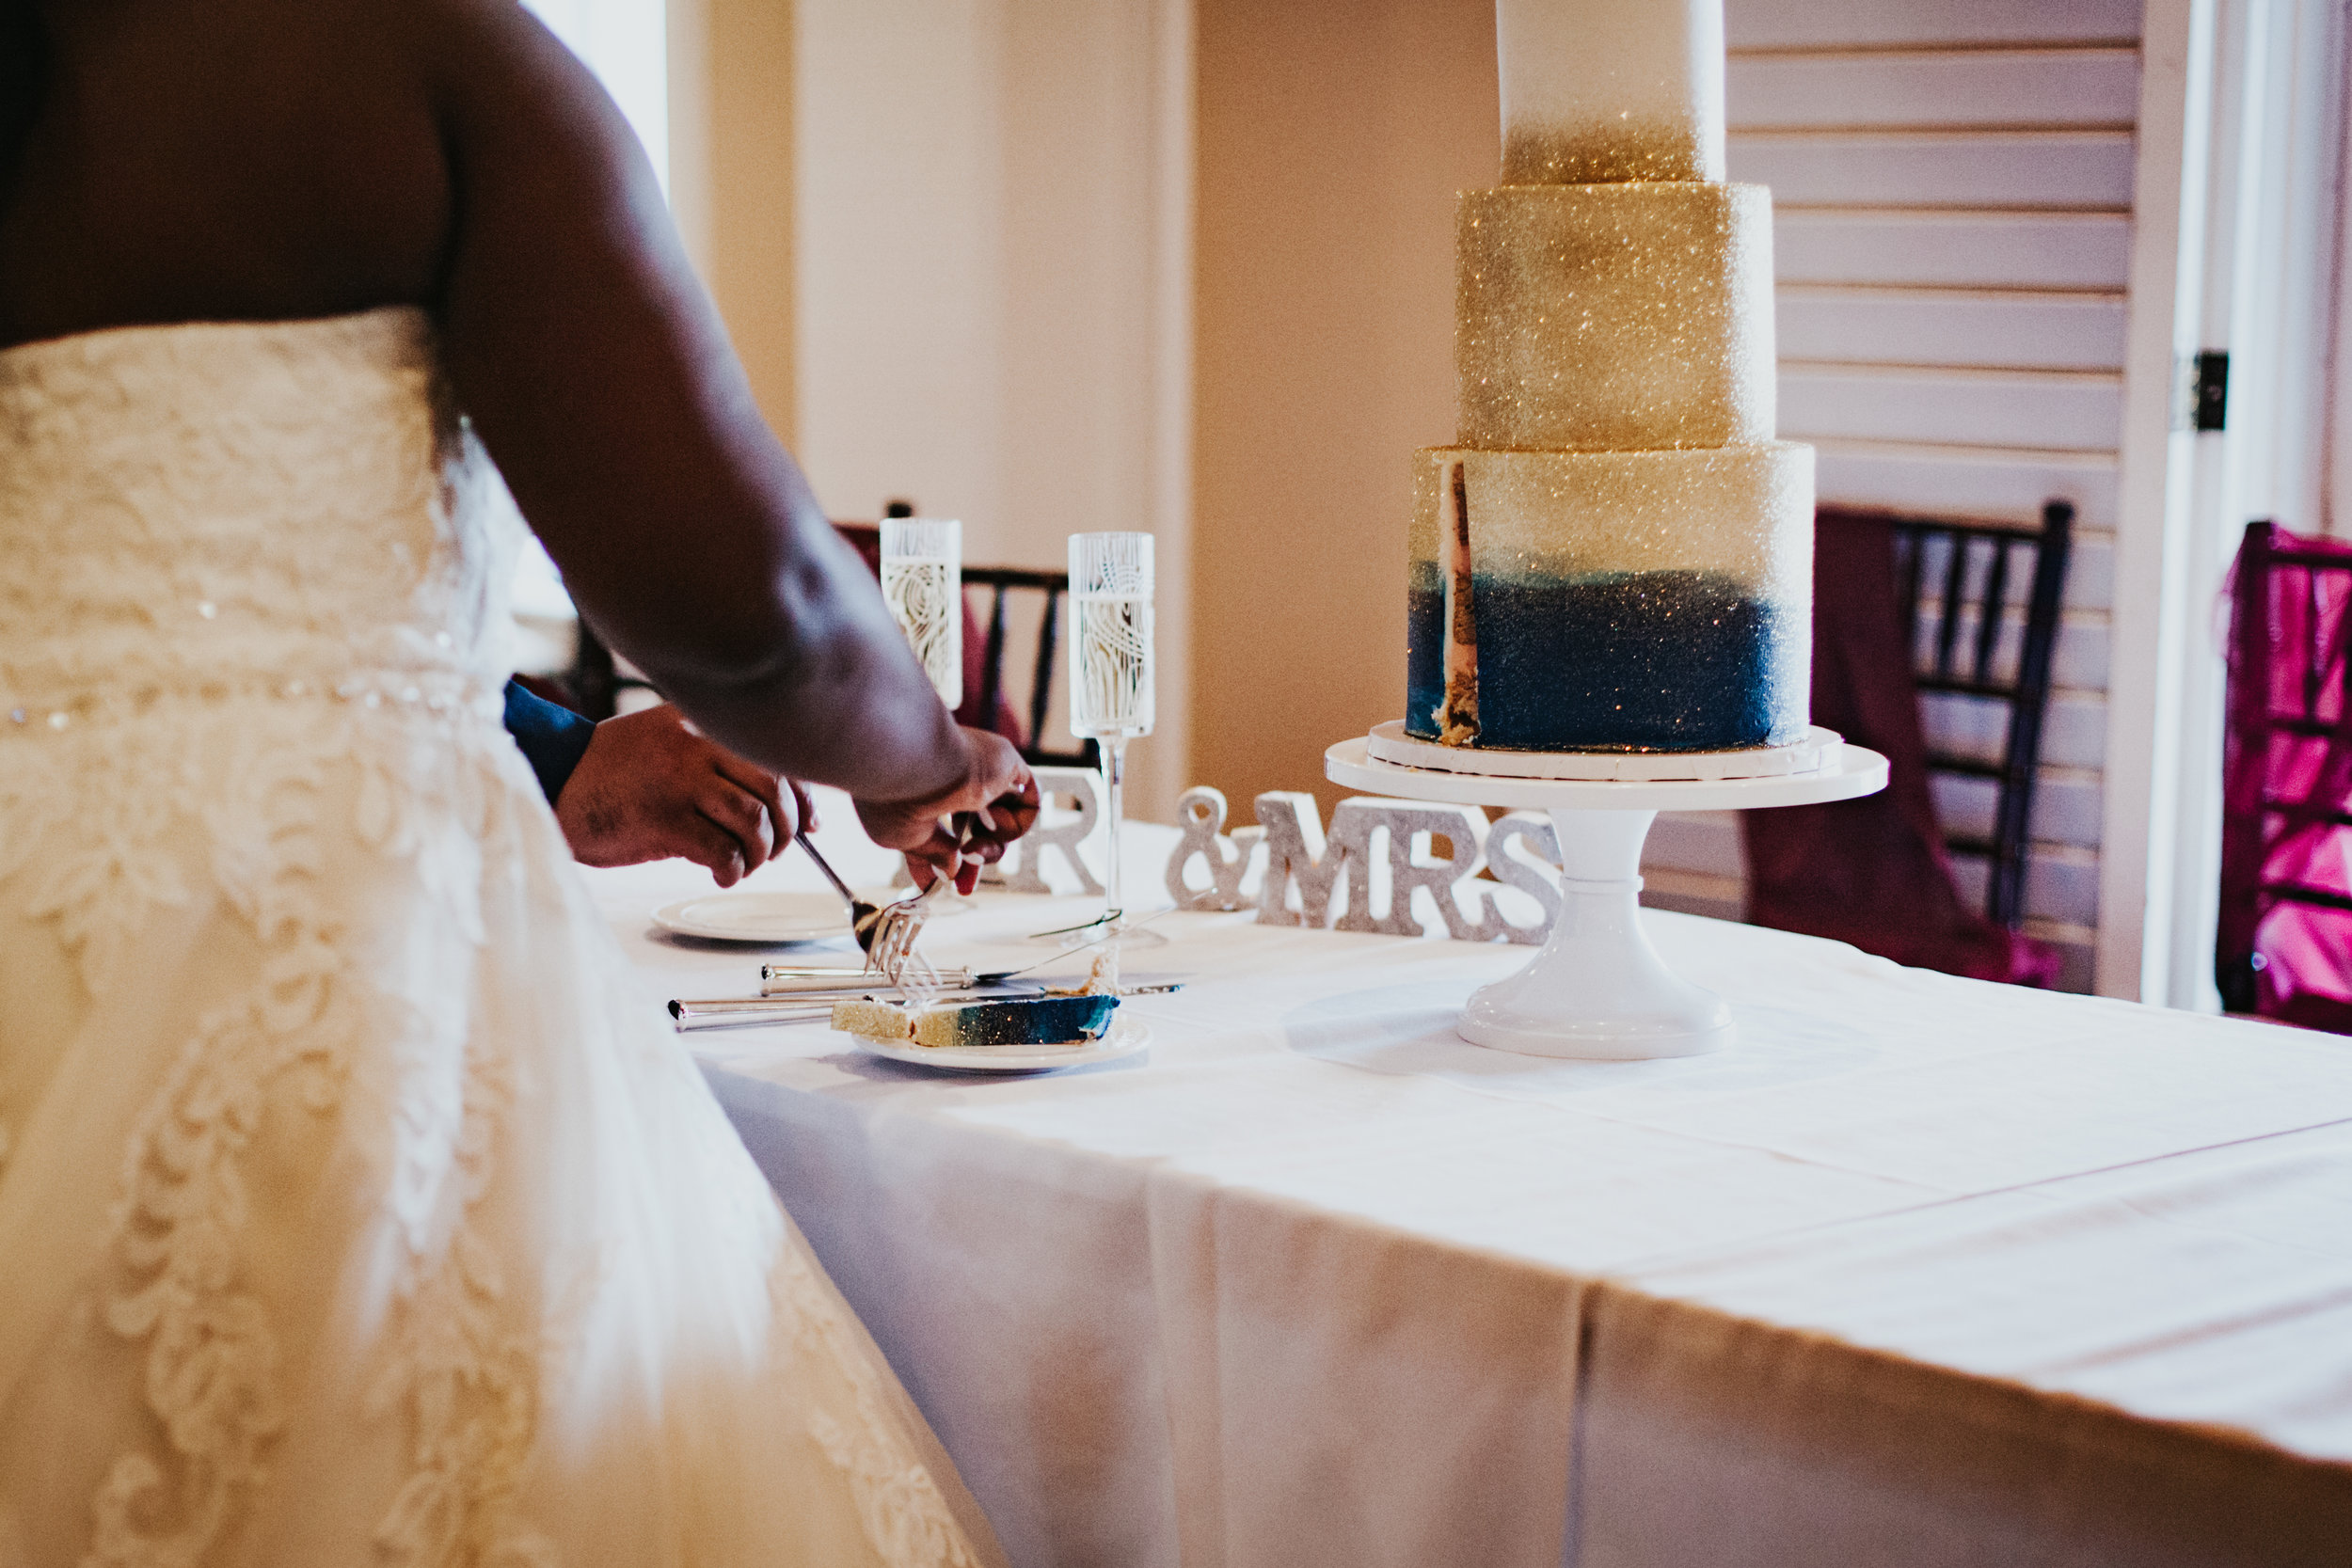  Hope Valley Country Club, Raleigh NC | Fall wedding | Wedding reception photos | Cake-cutting photos | Marina Rey Photography 